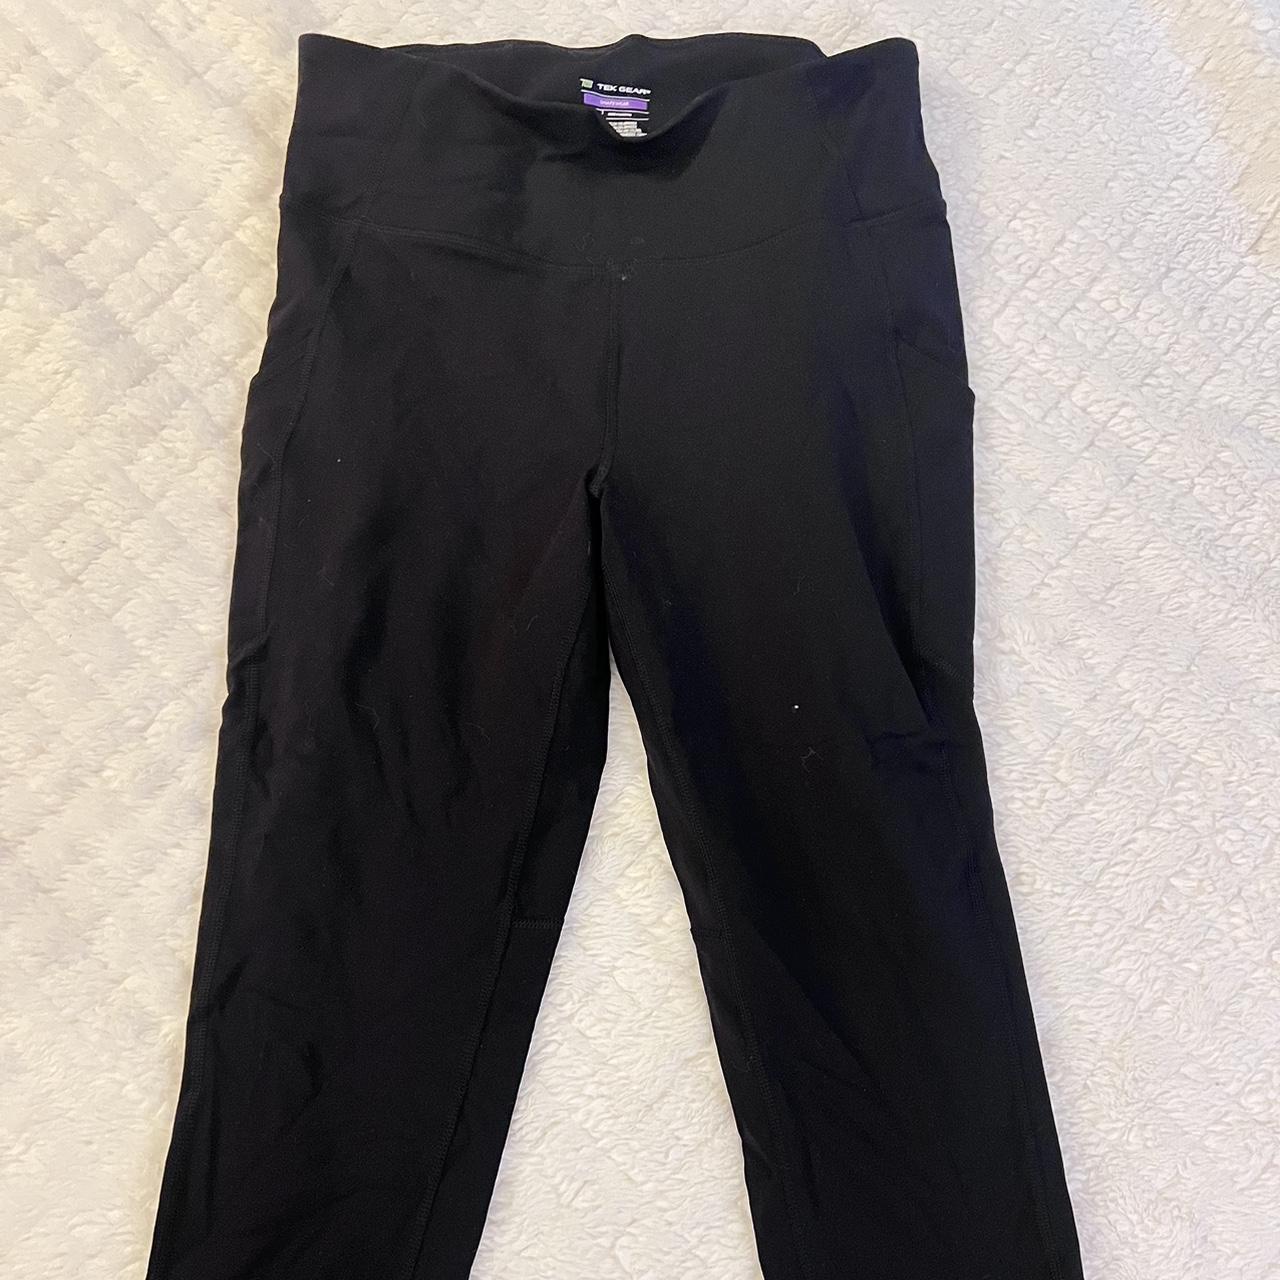 Black tek gear leggings with pockets - Depop